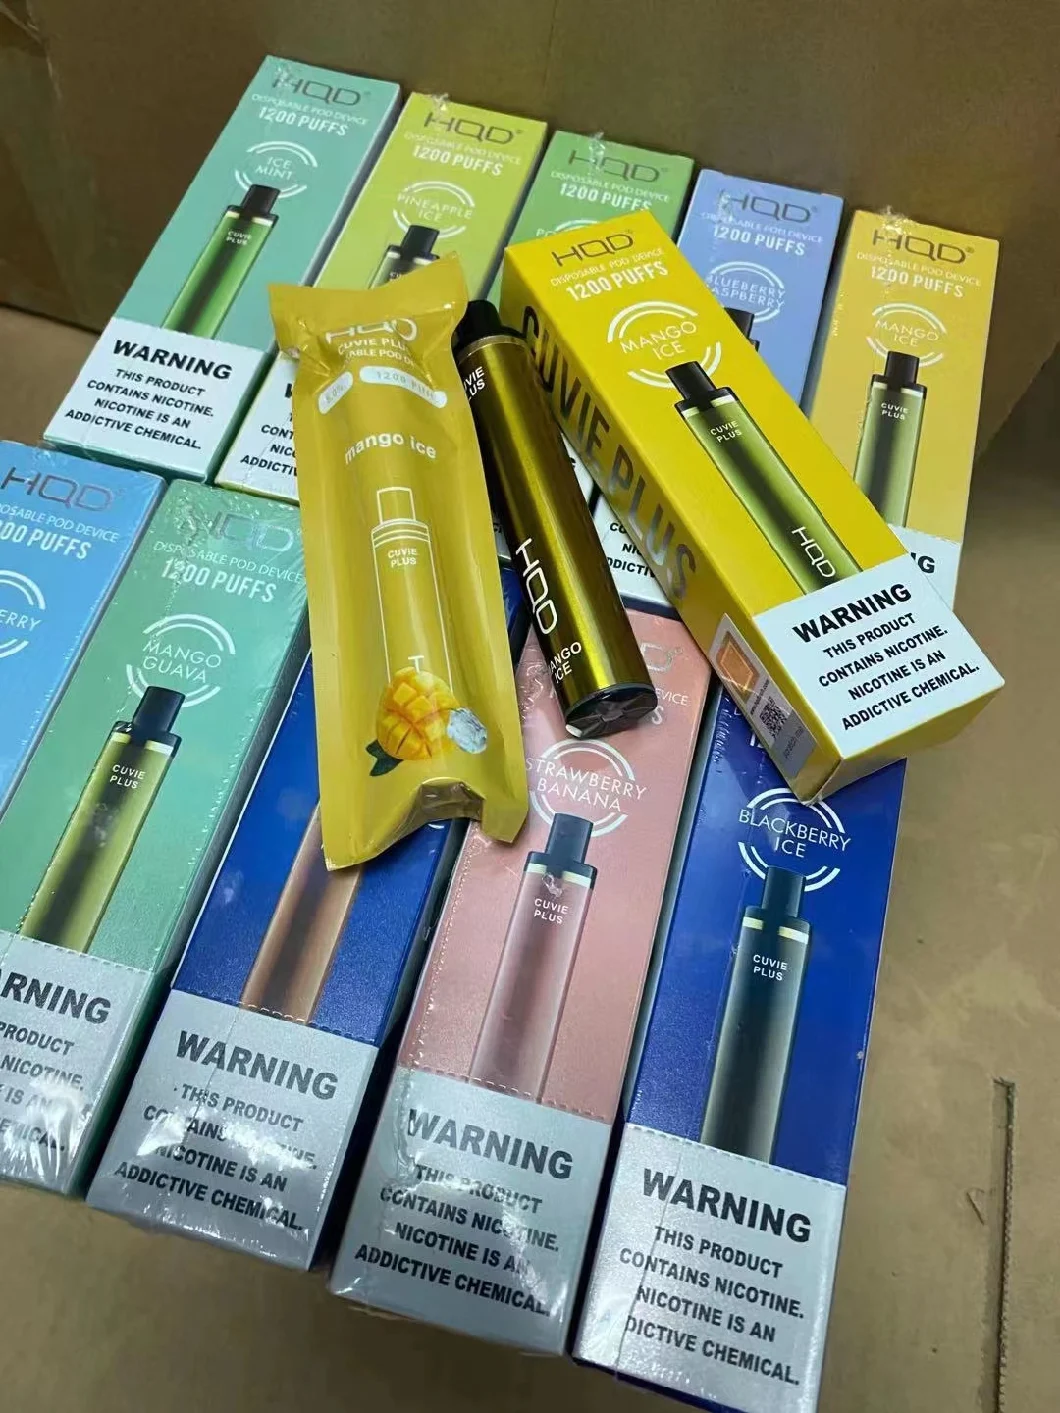 Randm Dazzle Light Glowing Disposable Vape Pen Pod Device Wholesale 5000 Puffs 5000puffs